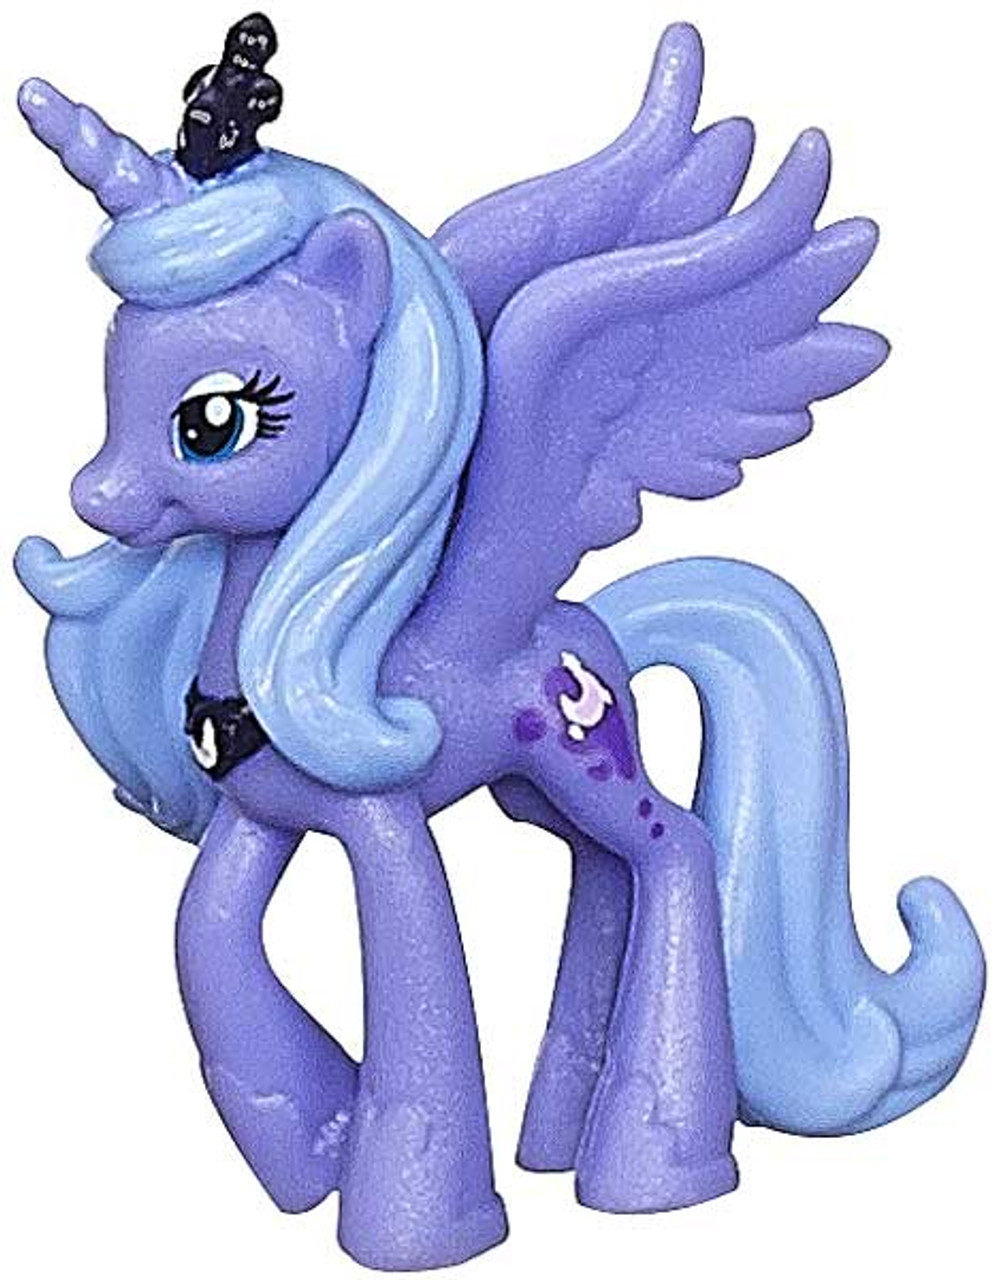 My Little Pony friendship is Magic episode 1 Princess Luna